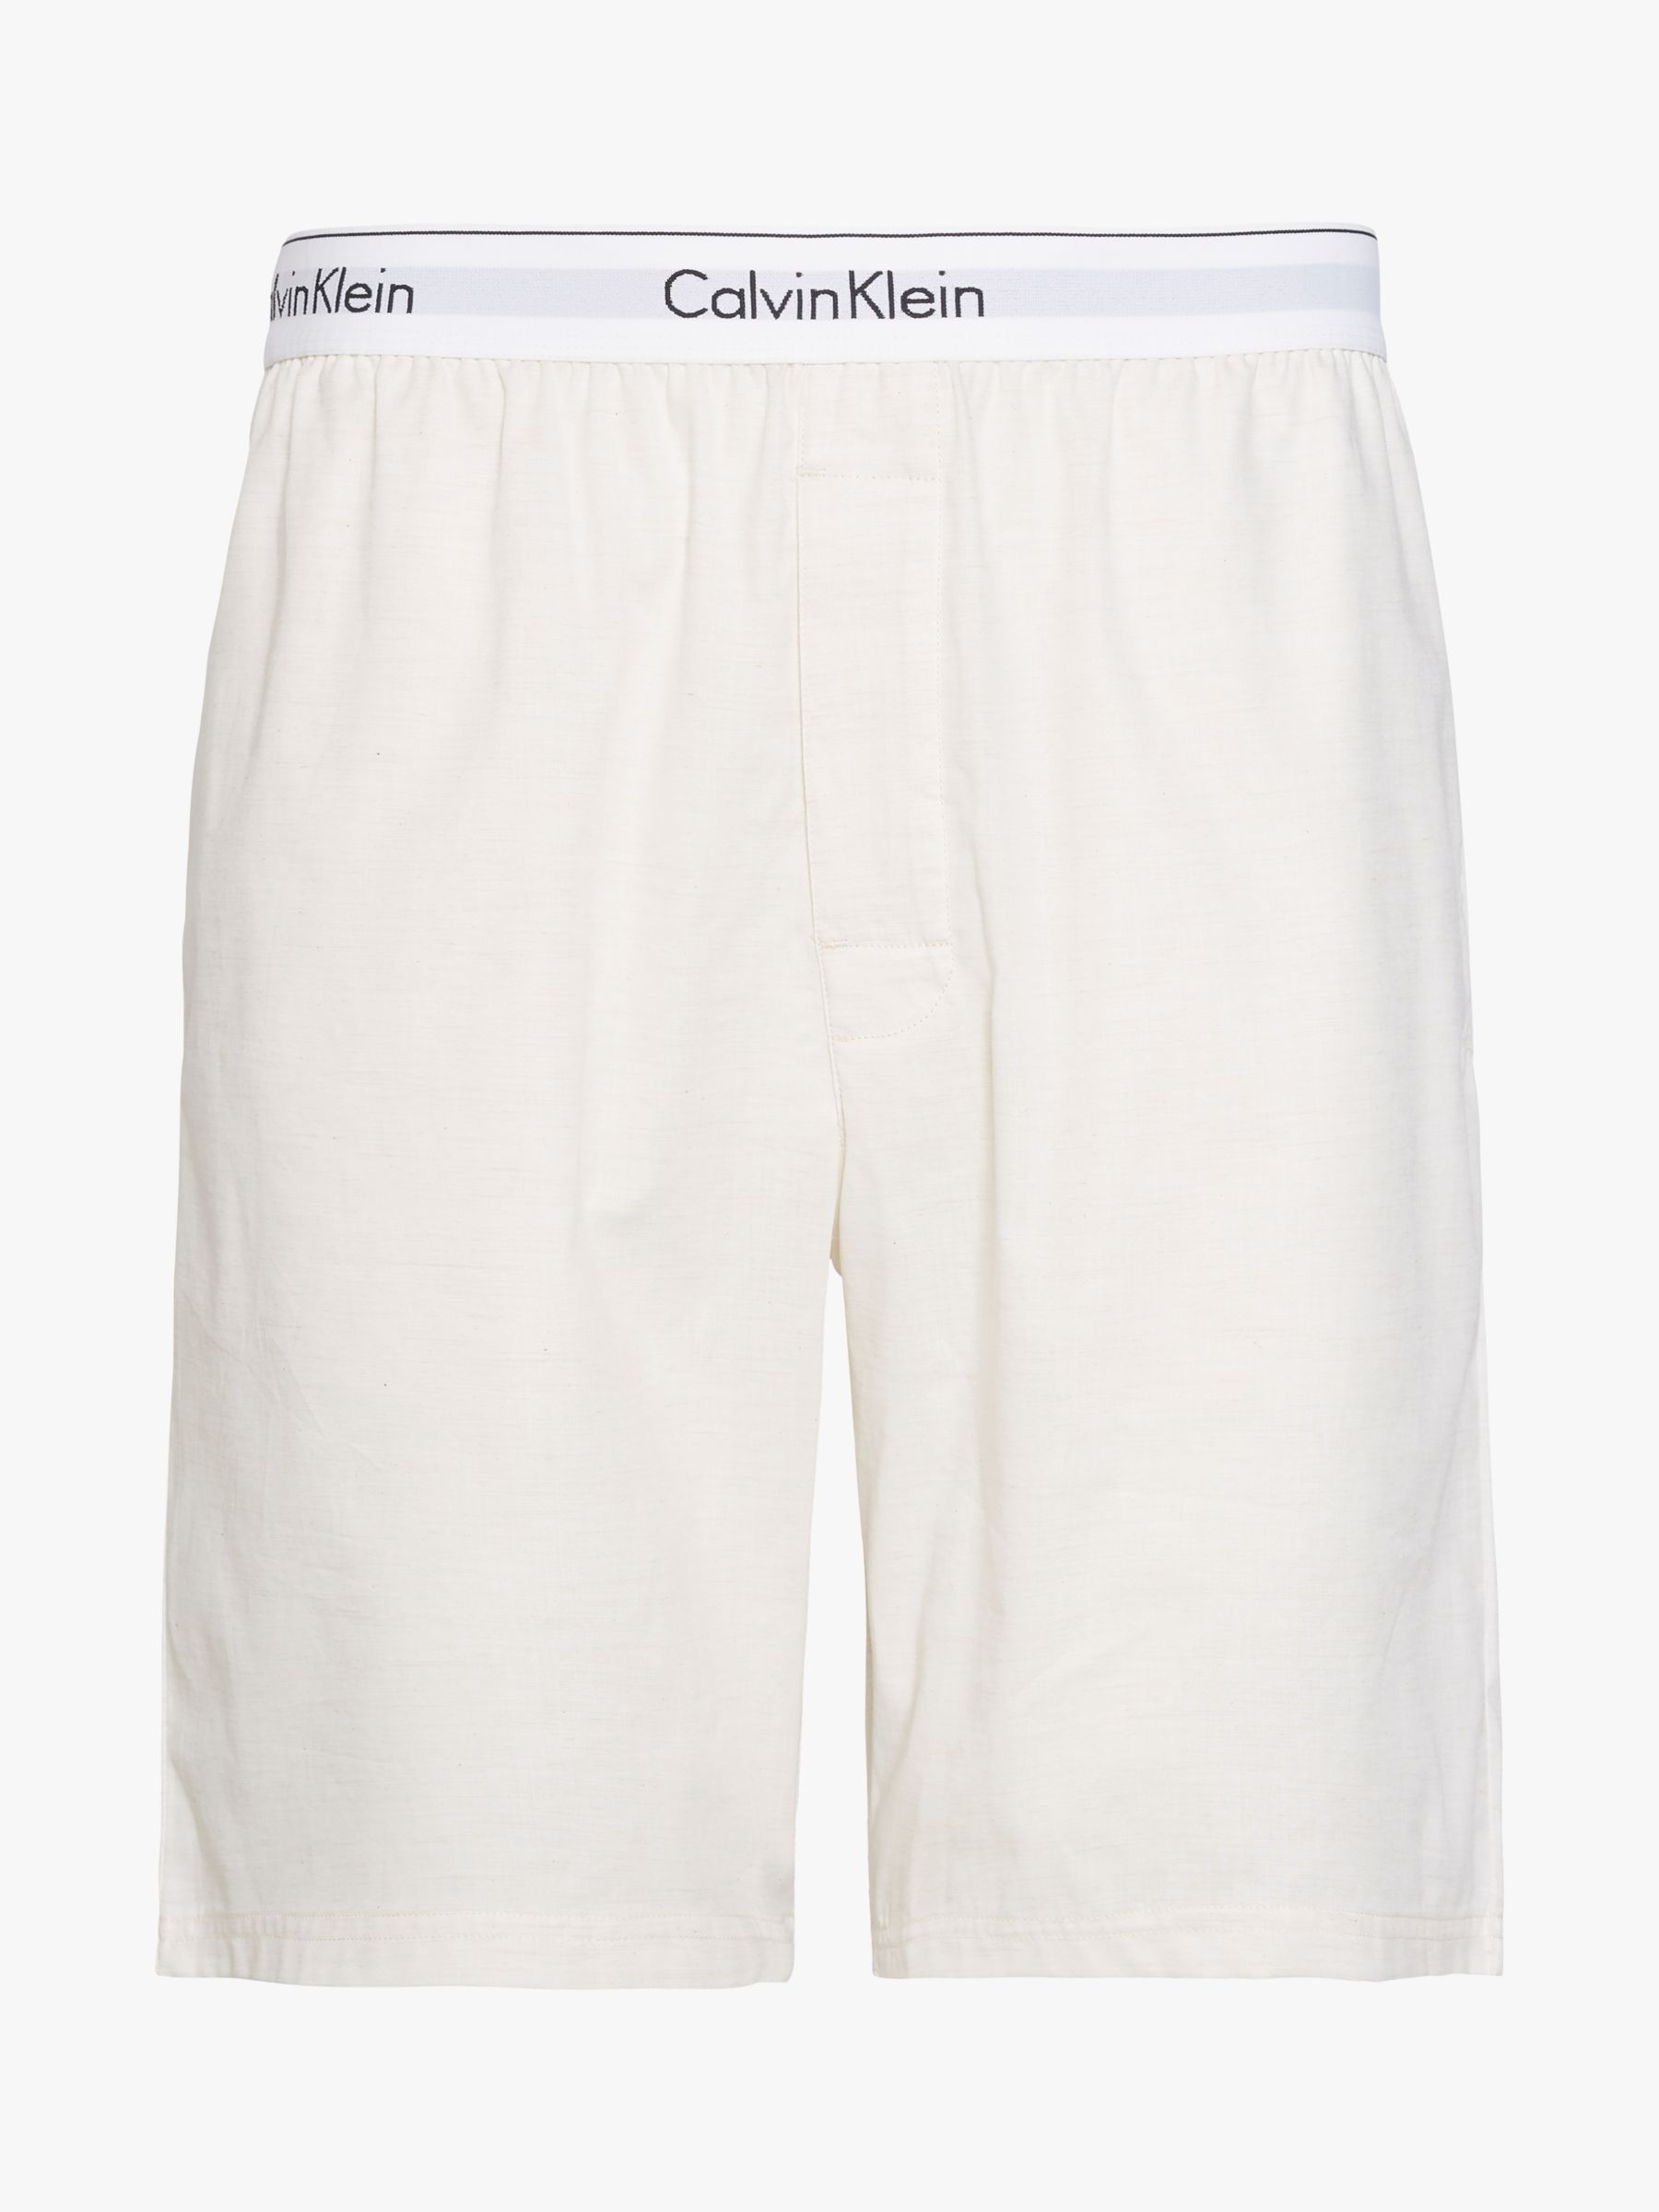 calvin klein modern shorts